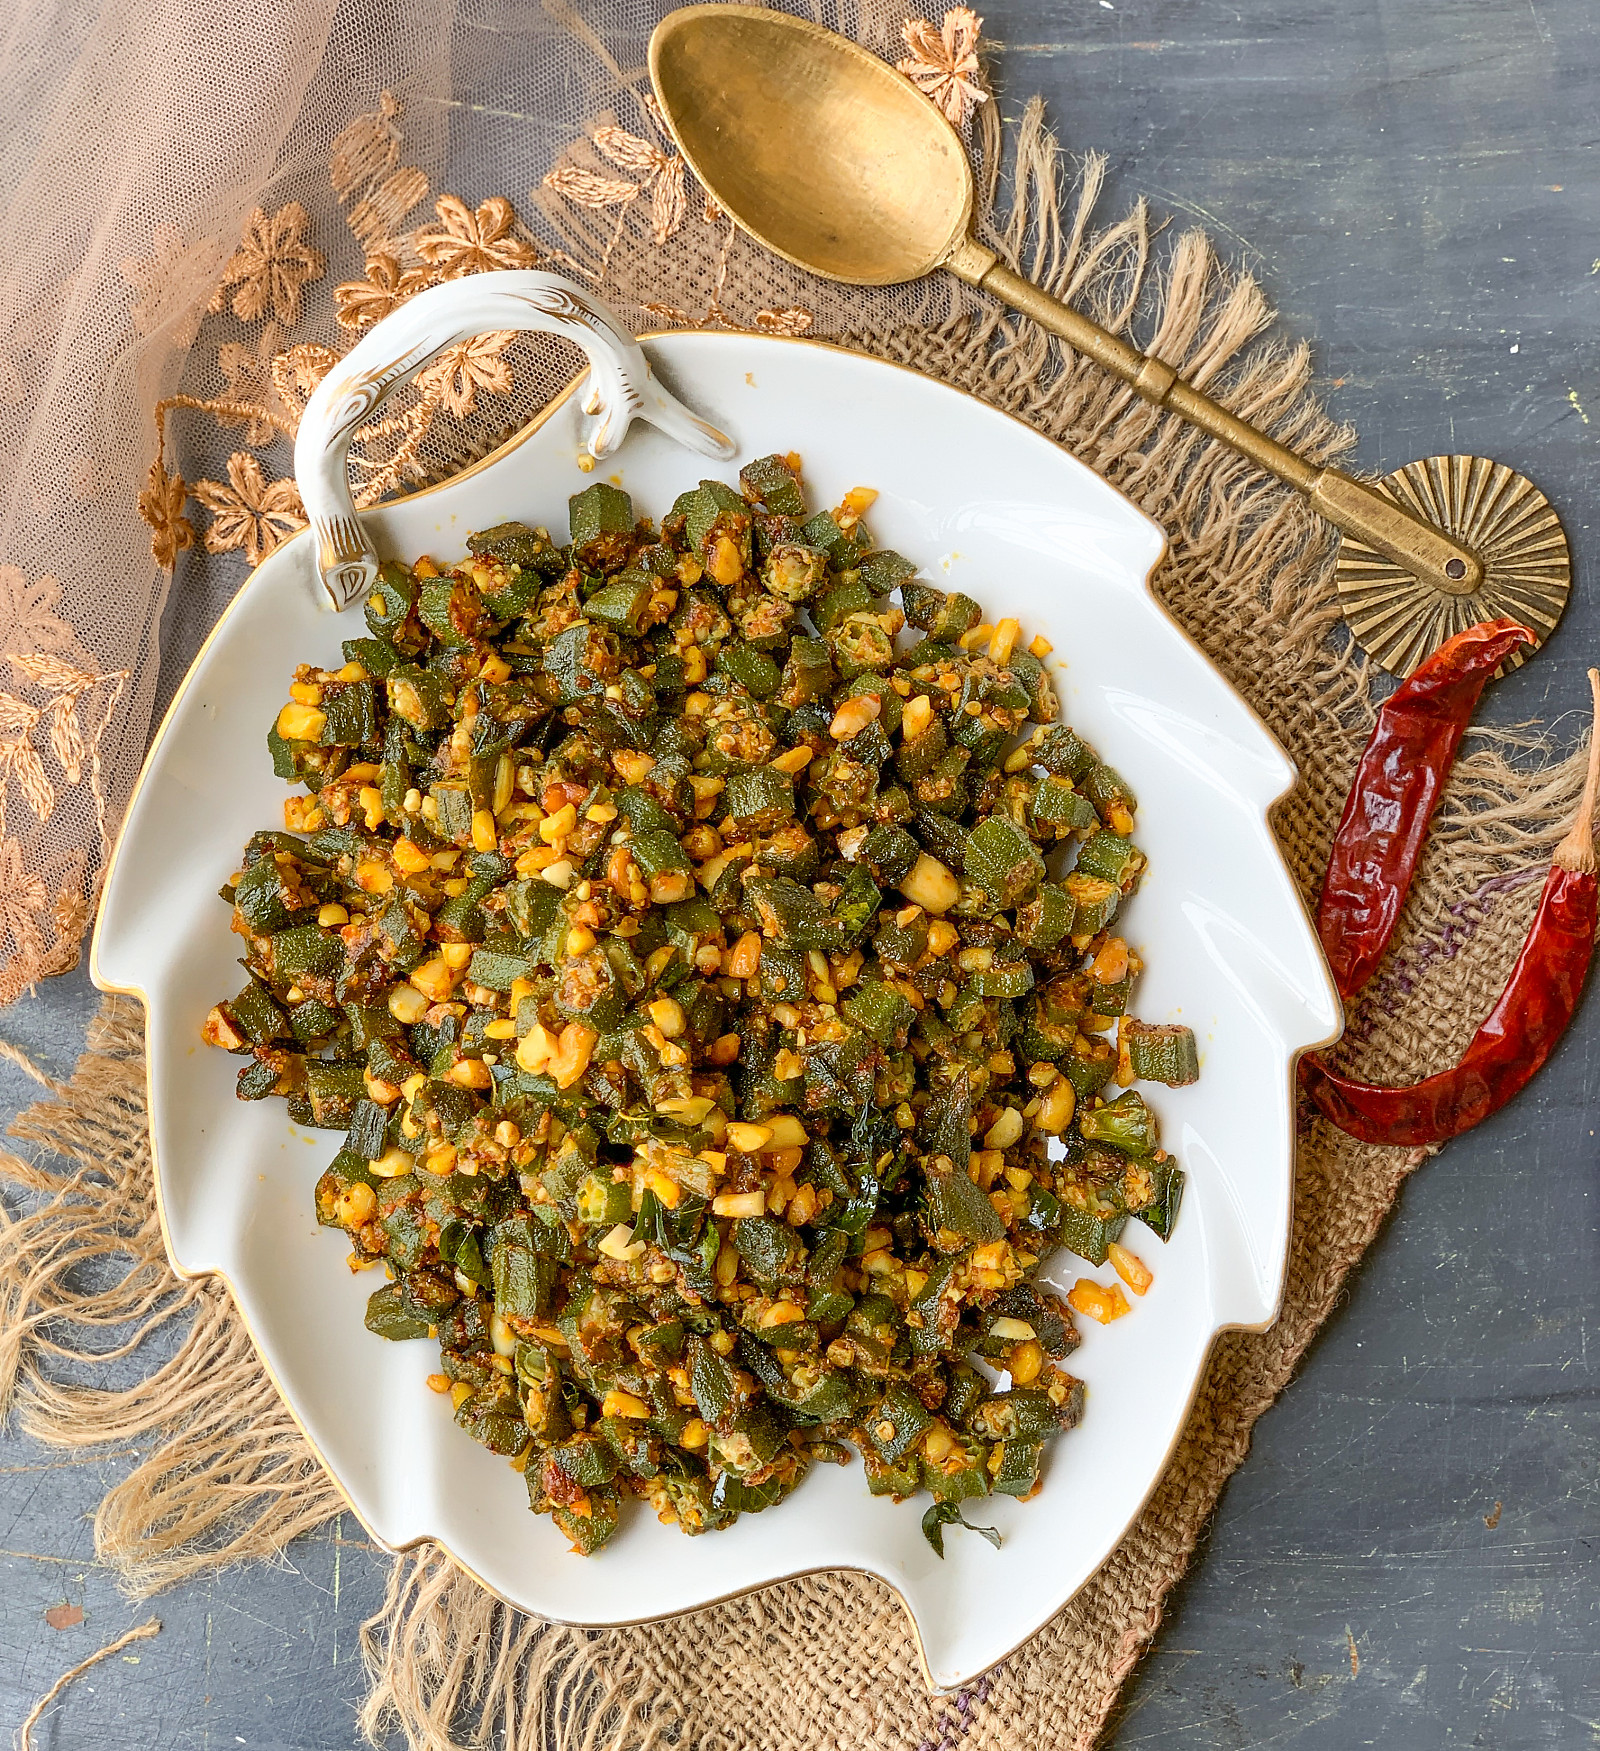 Moongphali Bhindi Sabzi Recipe - Lady's Finger Peanut Stir Fry